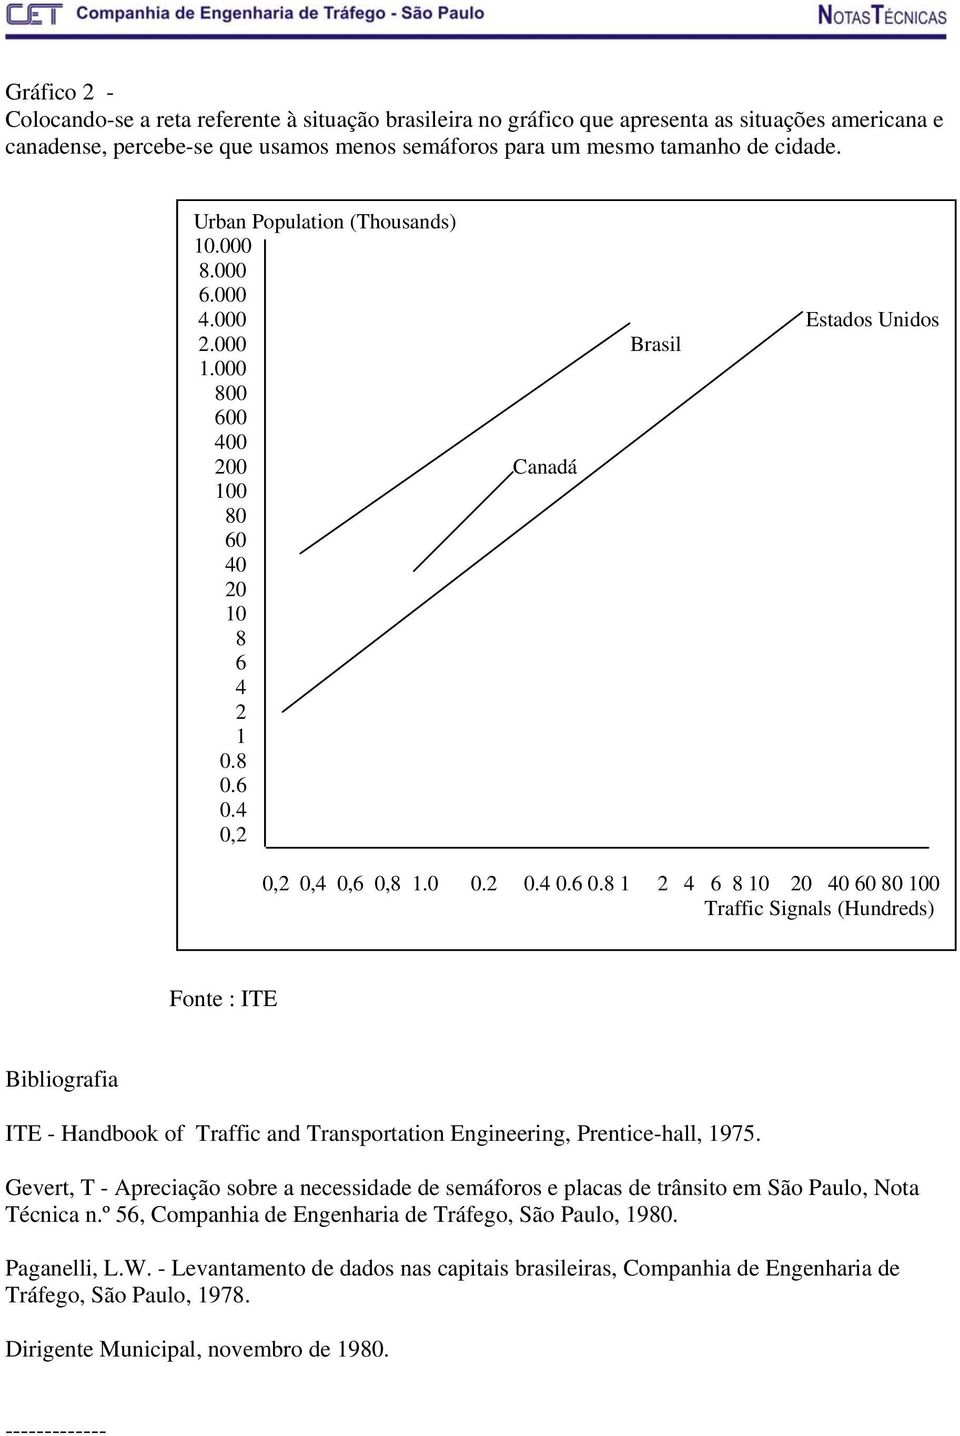 4 0,2 0,2 0,4 0,6 0,8 1.0 0.2 0.4 0.6 0.8 1 2 4 6 8 10 20 40 60 80 100 Traffic Signals (Hundreds) Fonte : ITE Bibliografia ITE - Handbook of Traffic and Transportation Engineering, Prentice-hall, 1975.